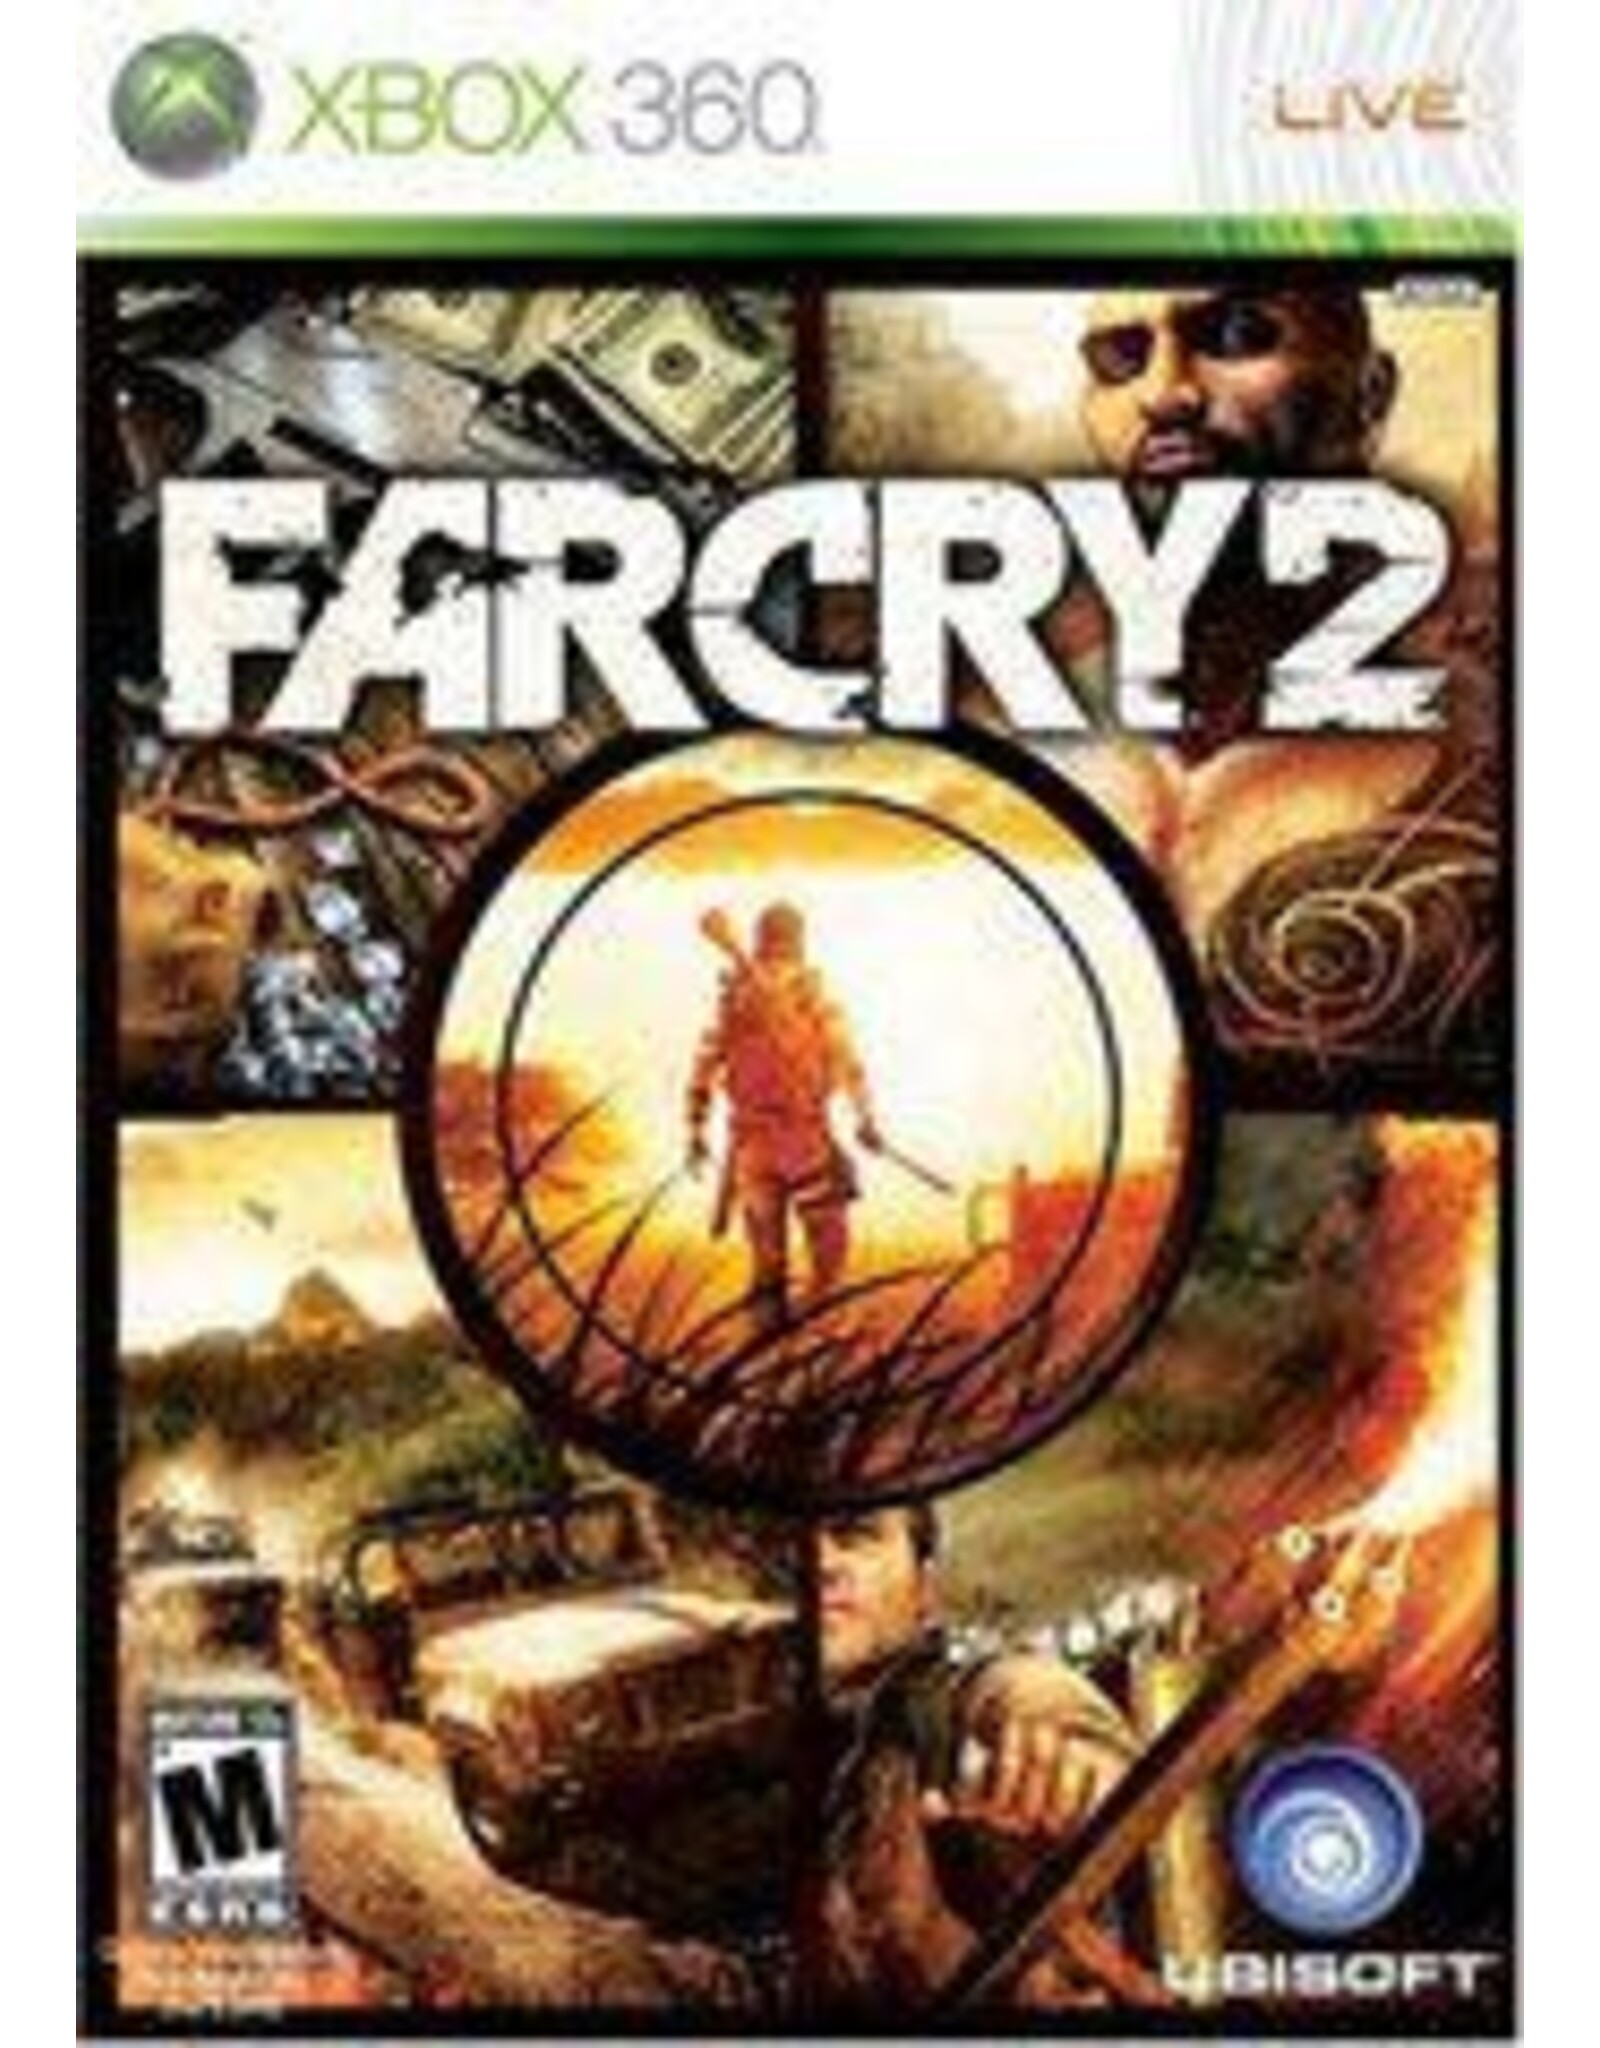 Xbox 360 Far Cry 2 (Used, Cosmetic Damage)